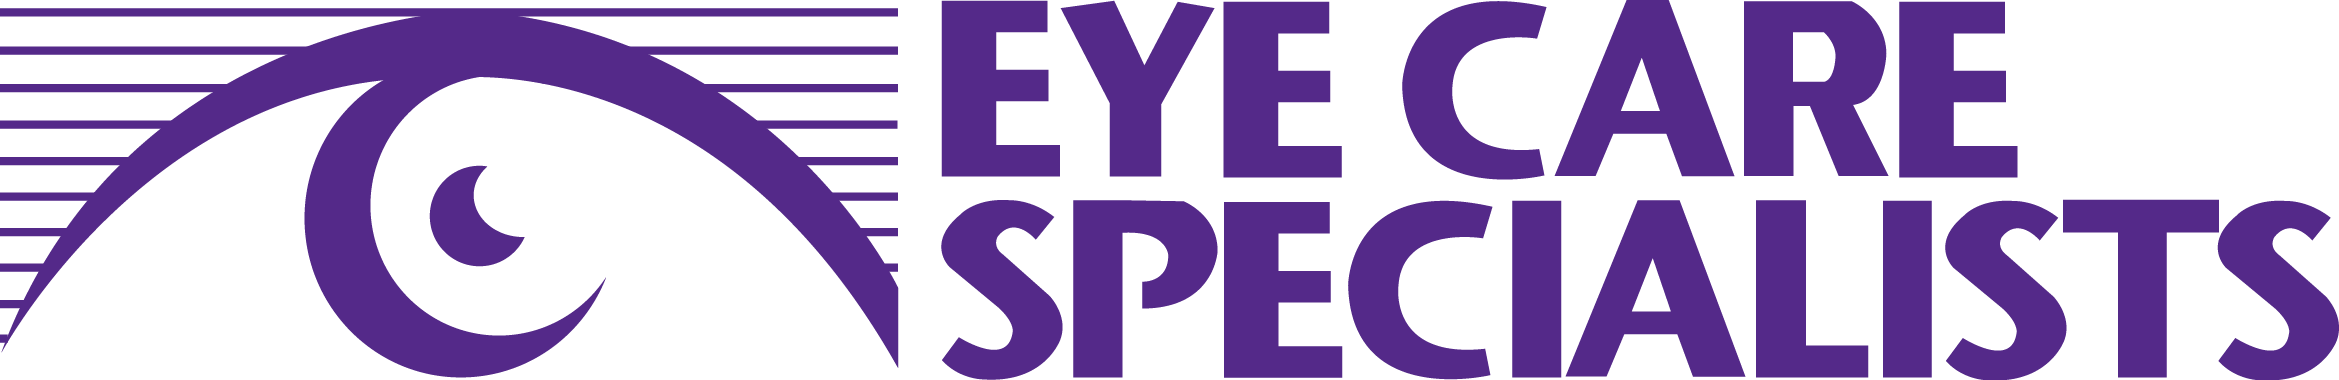 Eye Care Specialists Logo